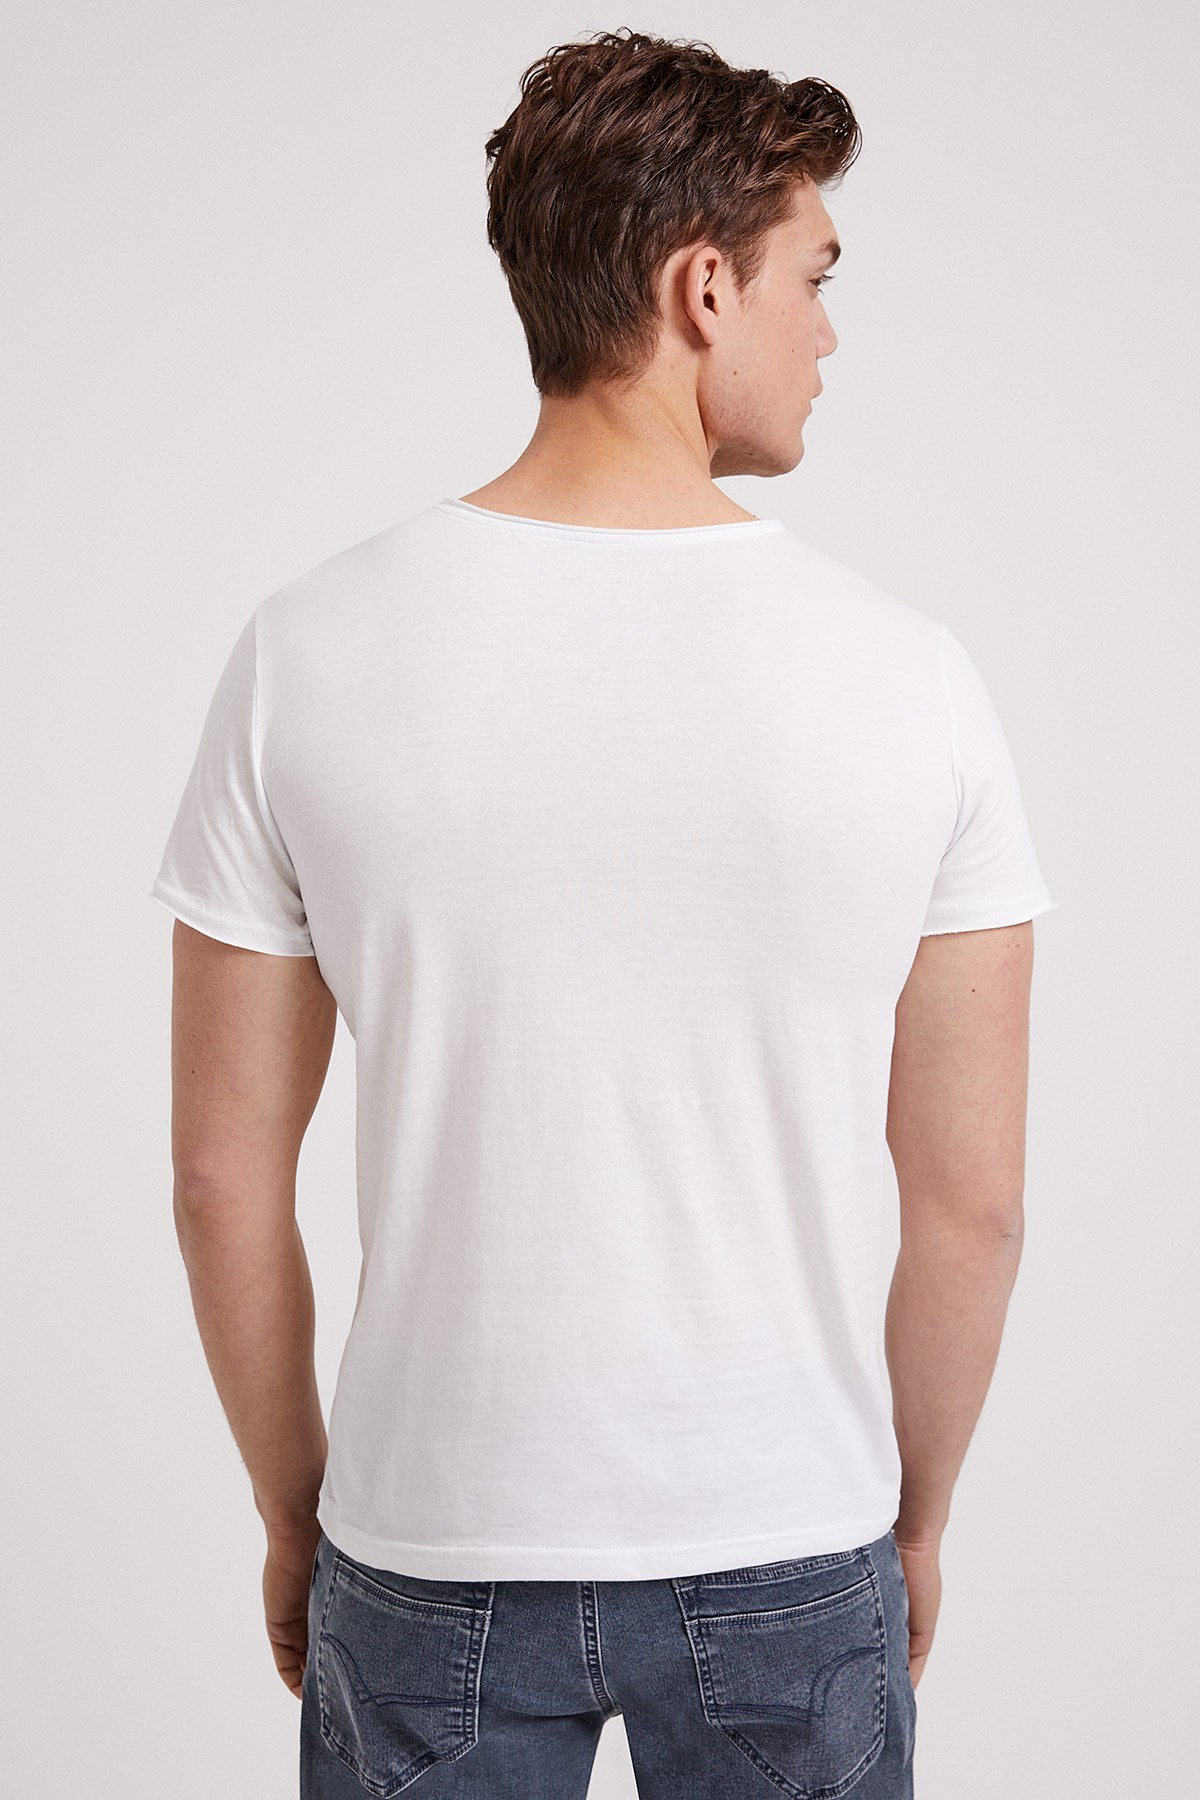 Lee Cooper Erkek T-Shirt 202 LCM 242019 Beyaz